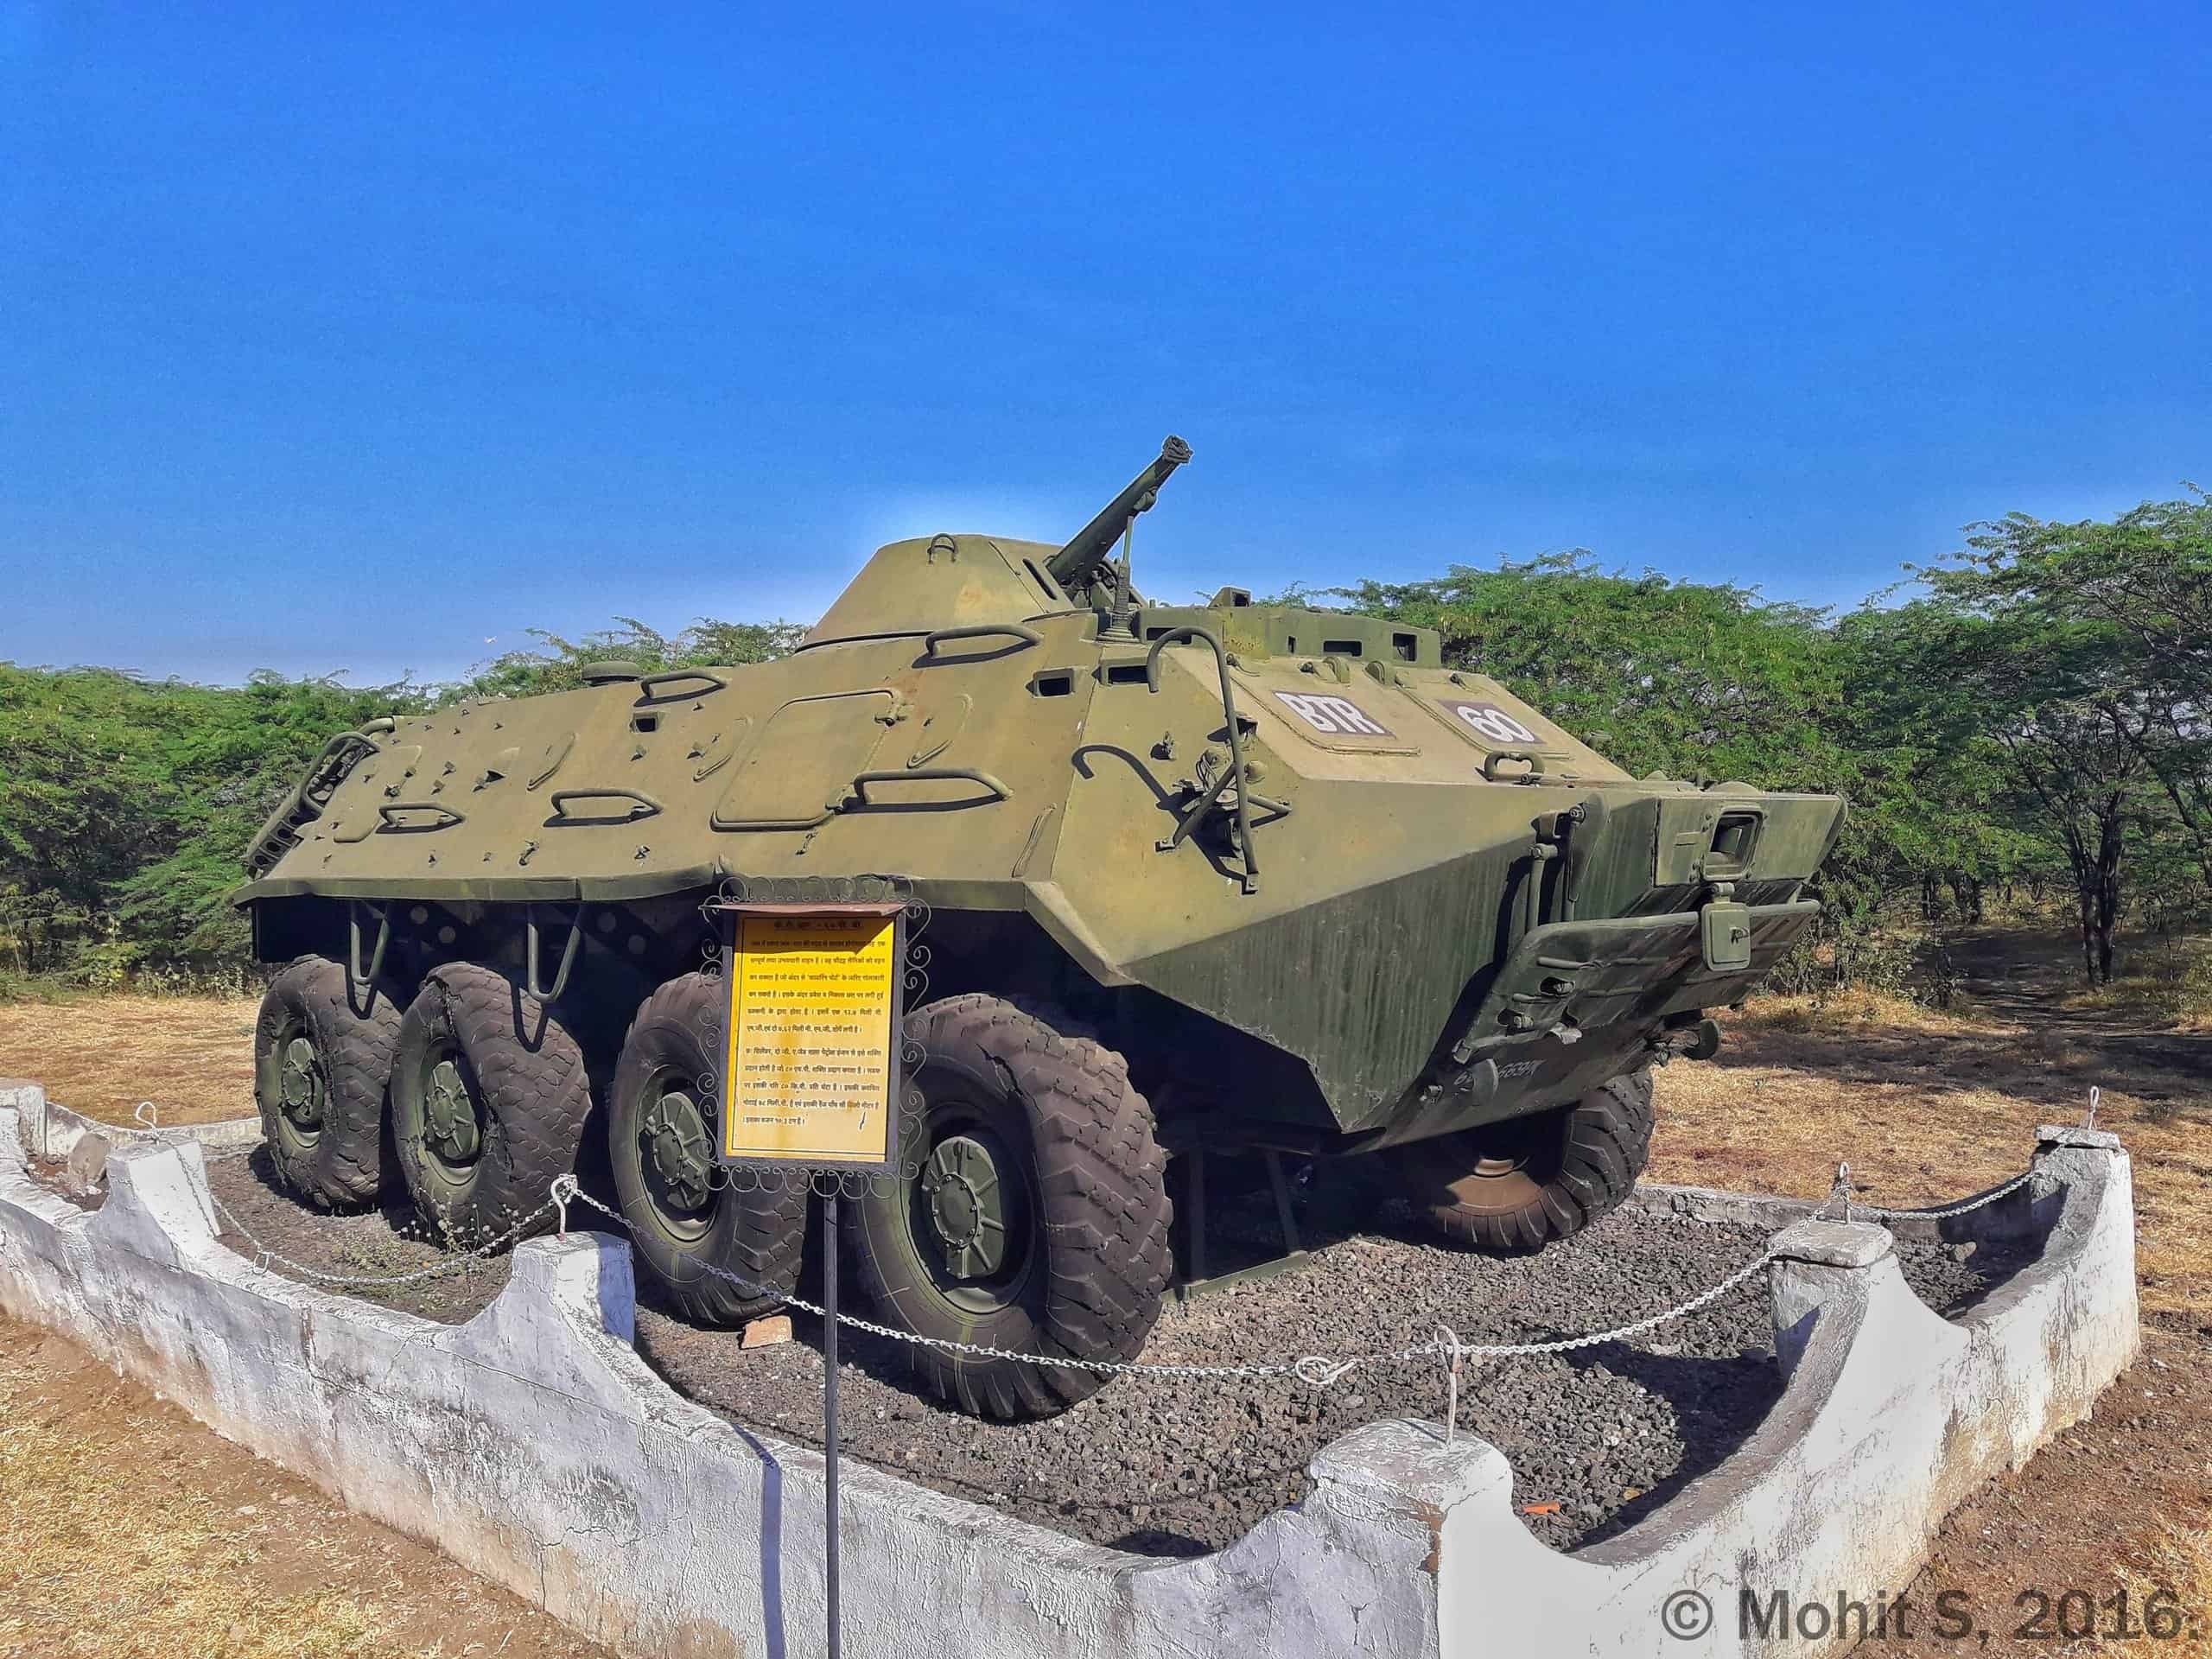 BTR-60 APC. by Mohit S